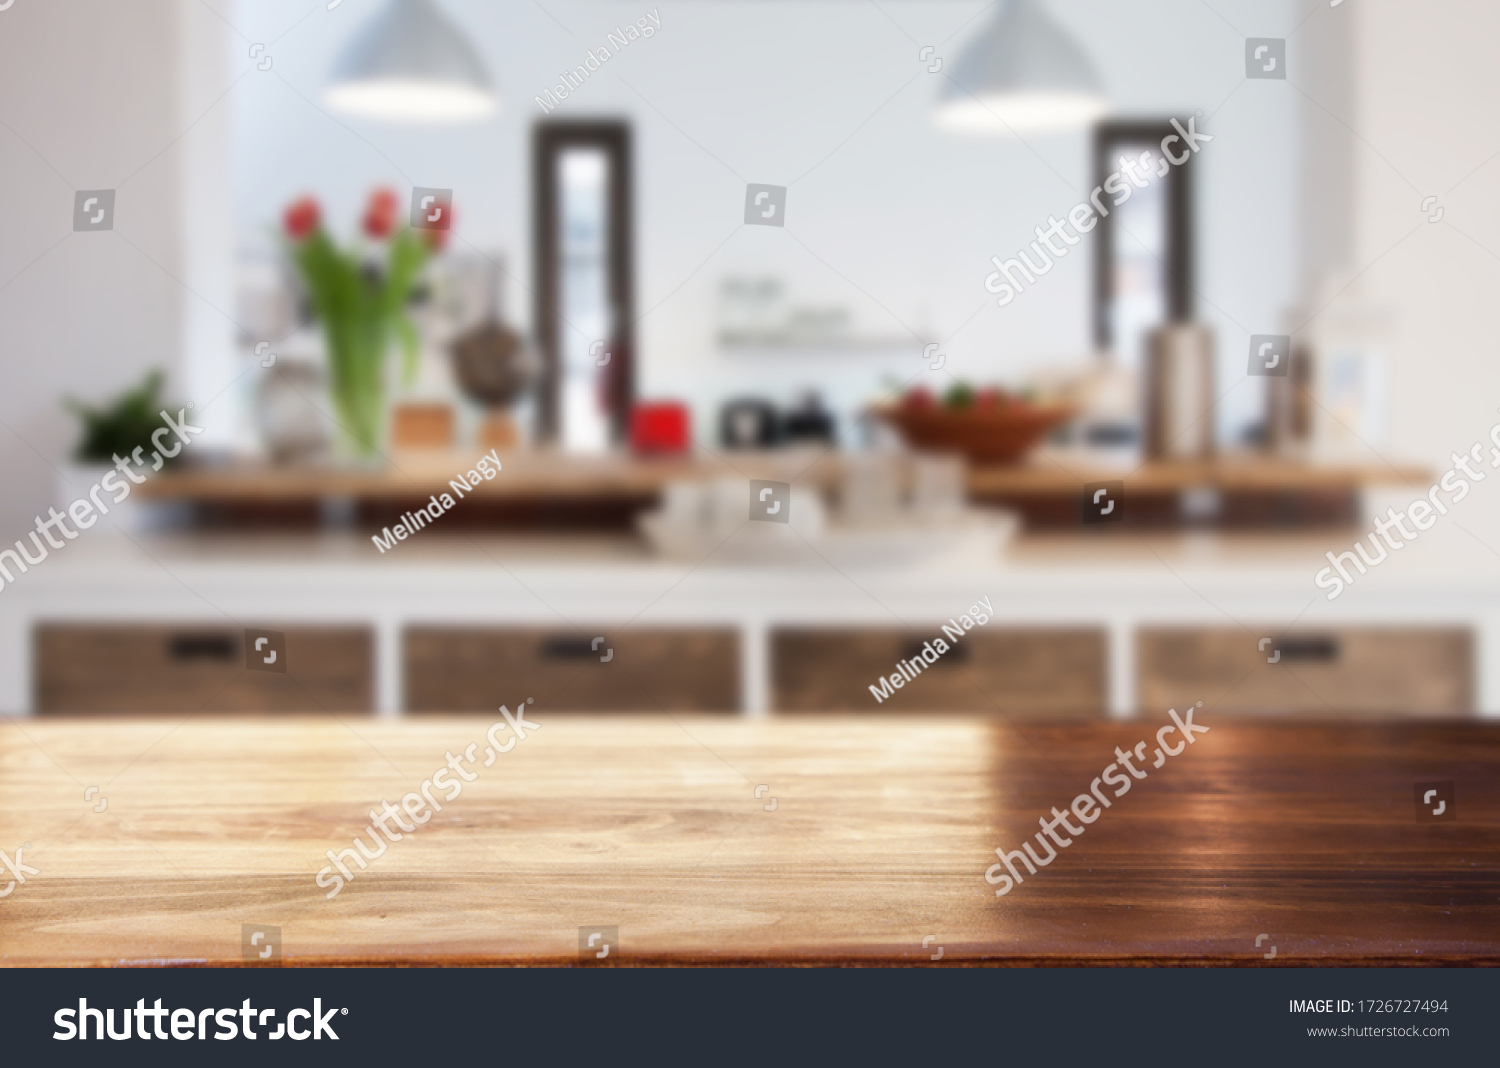 blurred kitchen interior  and desk space home background #1726727494